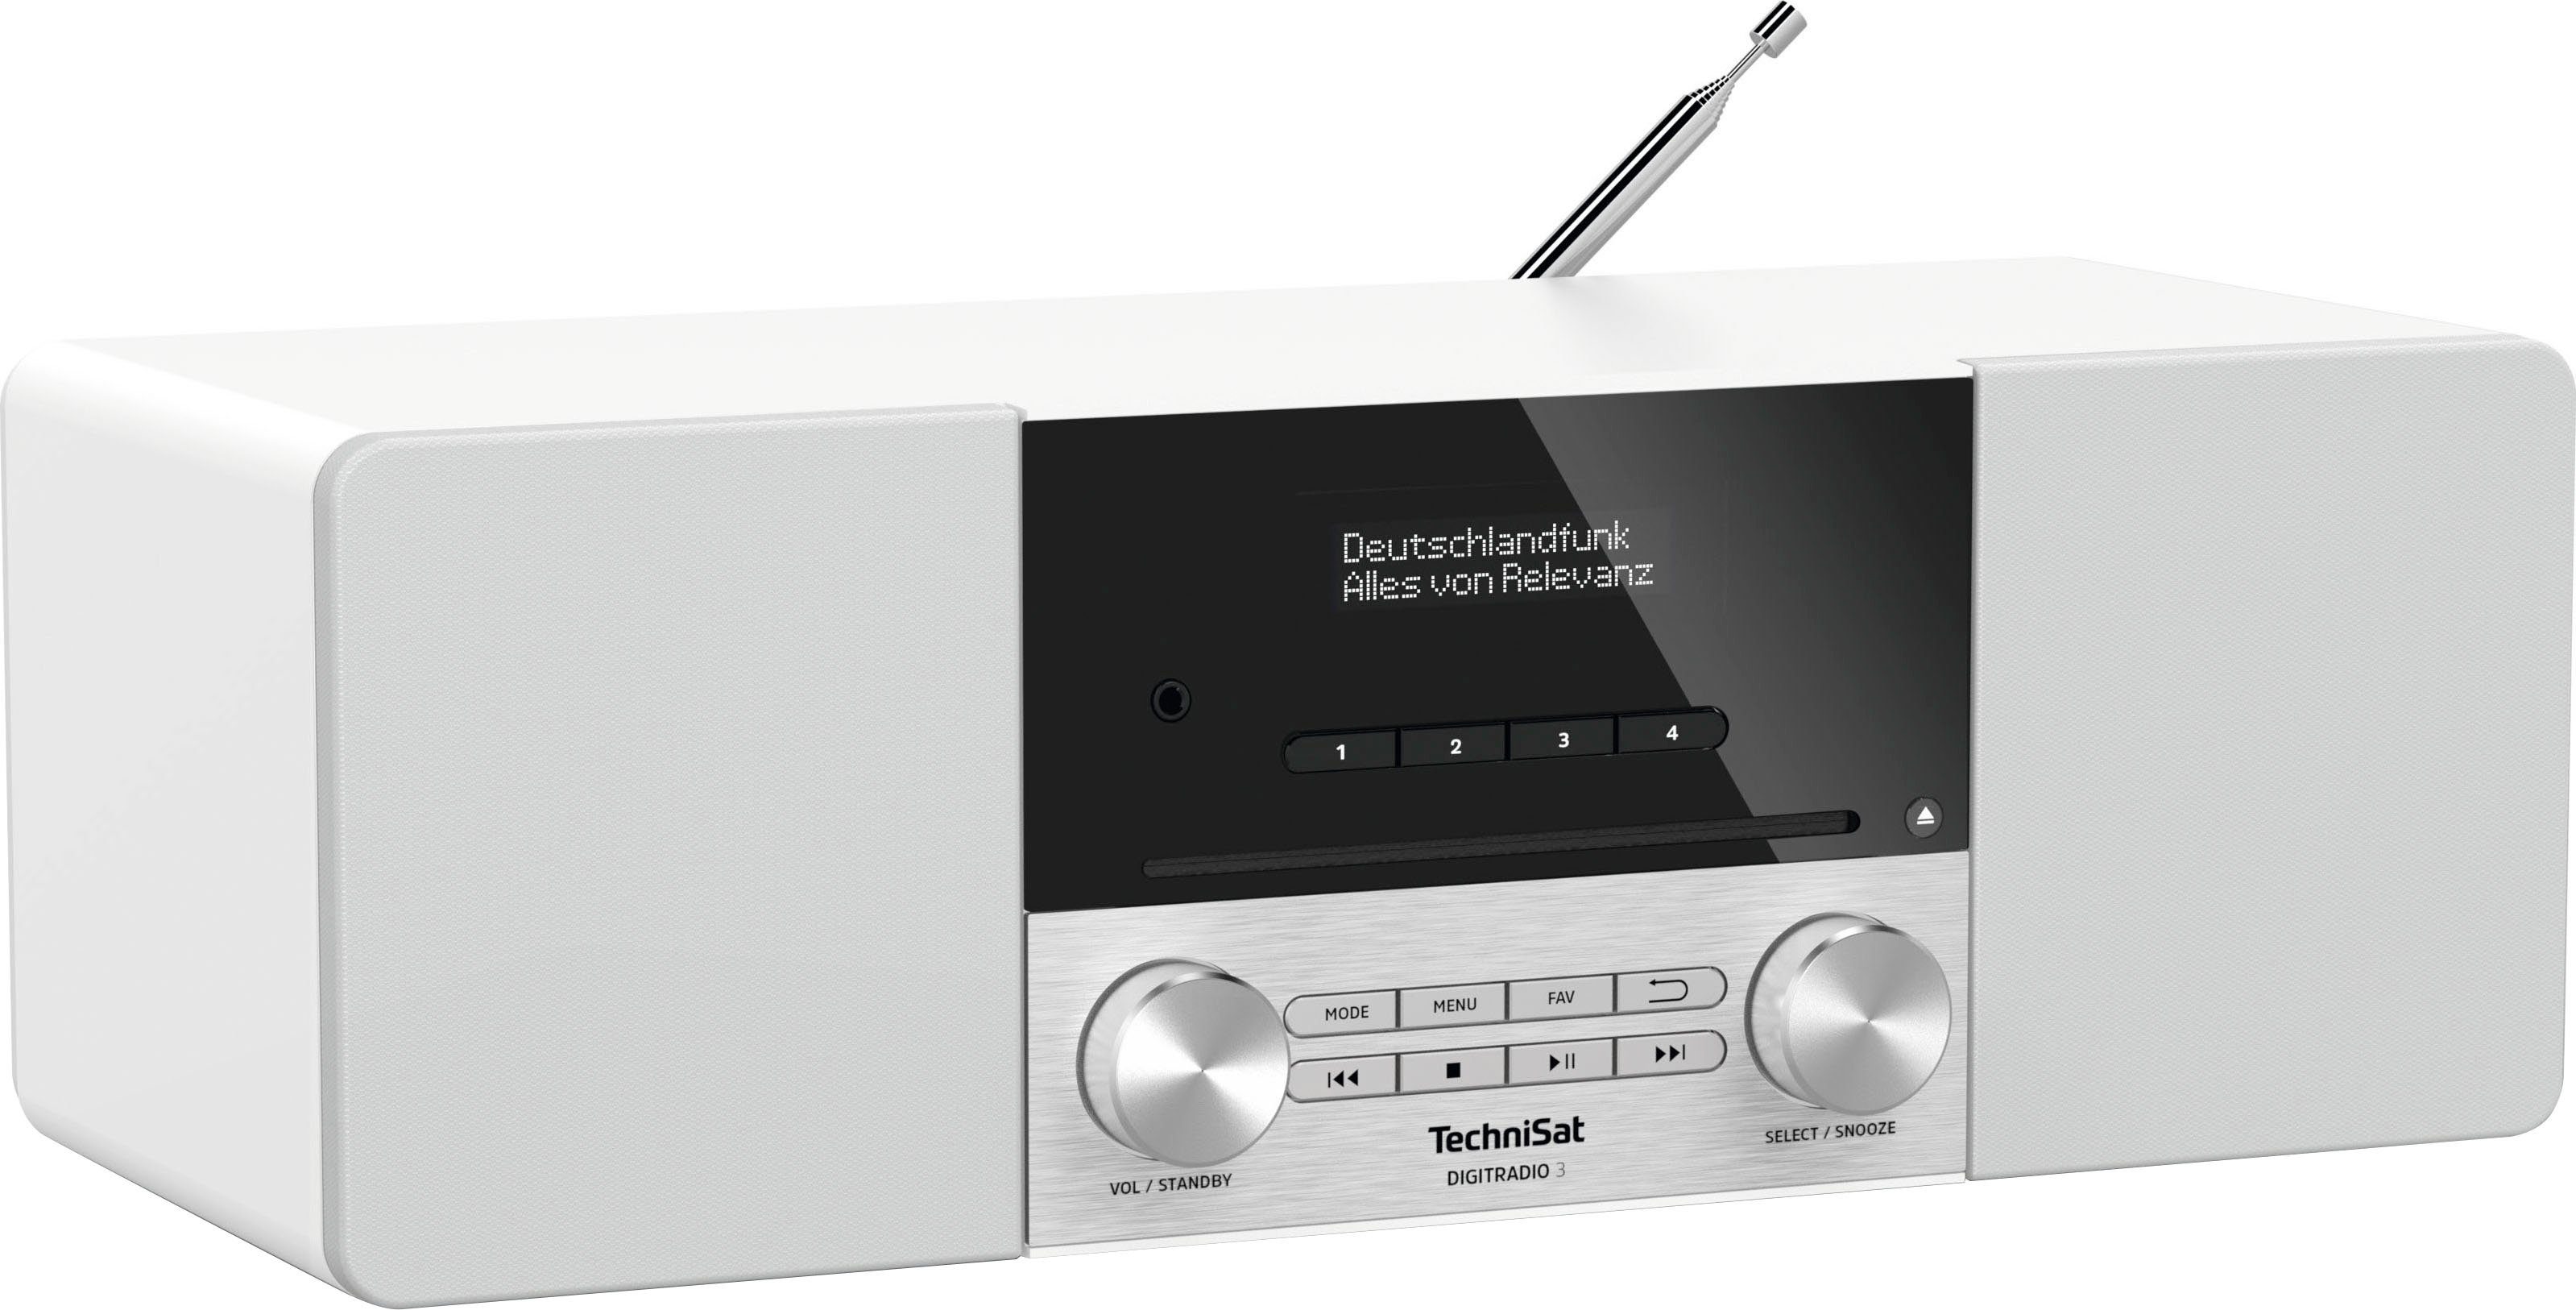 TechniSat DIGITRADIO 3 Digitalradio weiß CD-Player, W, mit UKW Germany) in (Digitalradio Made (DAB) (DAB), 20 RDS